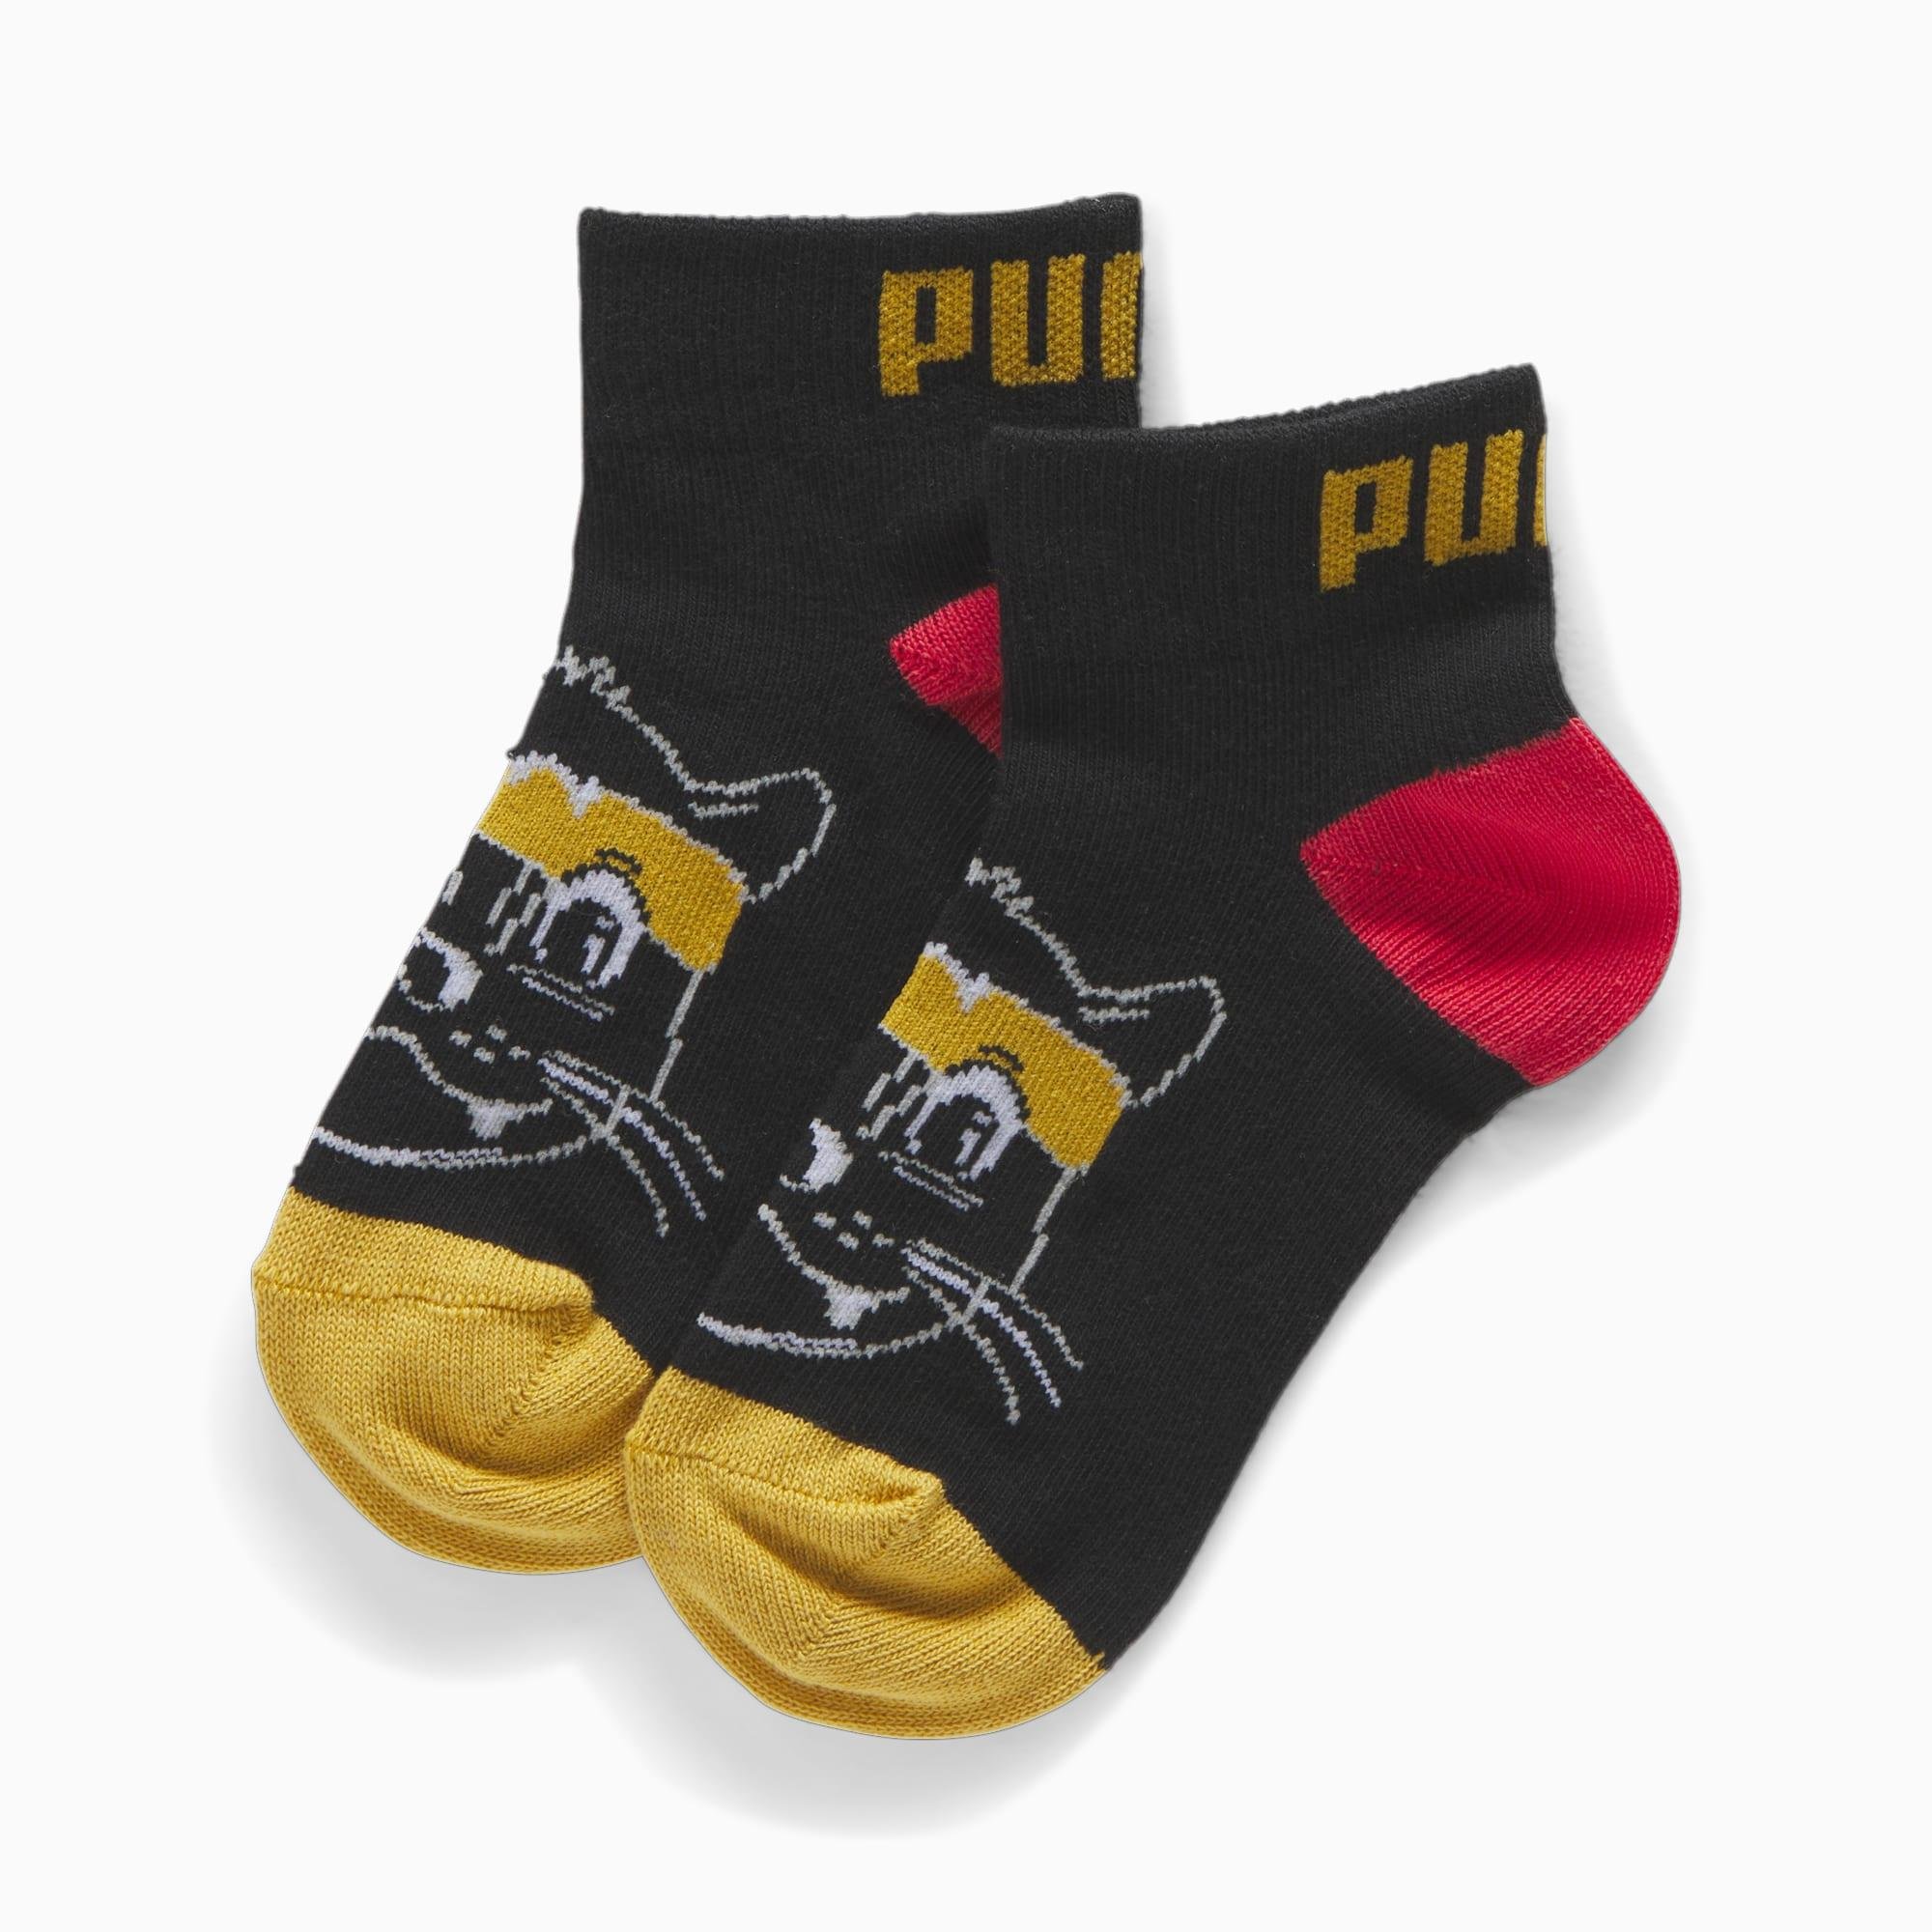 Big Kids' Unisex Socks (1 Pair) by PUMA